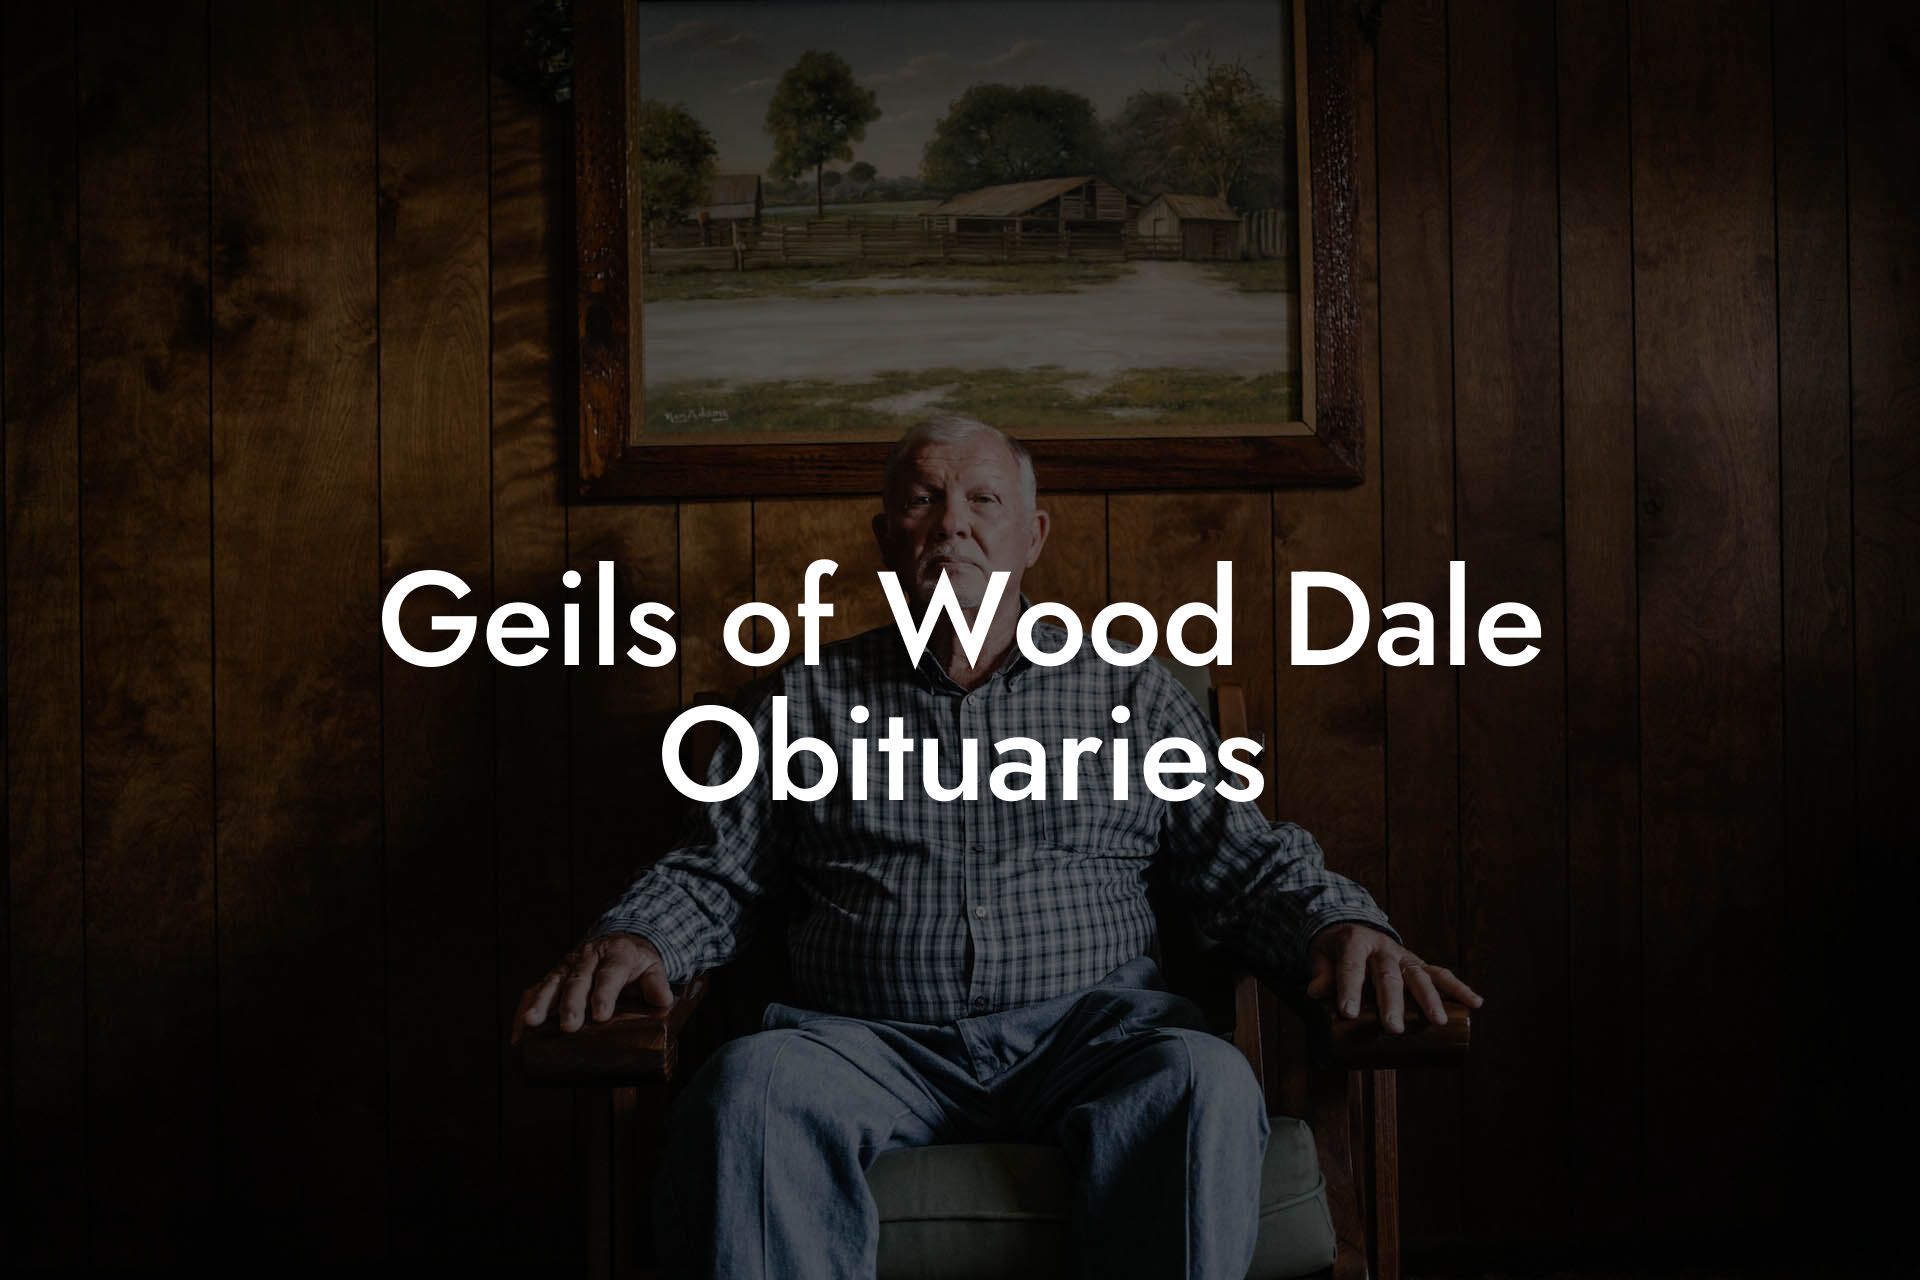 Geils of Wood Dale Obituaries